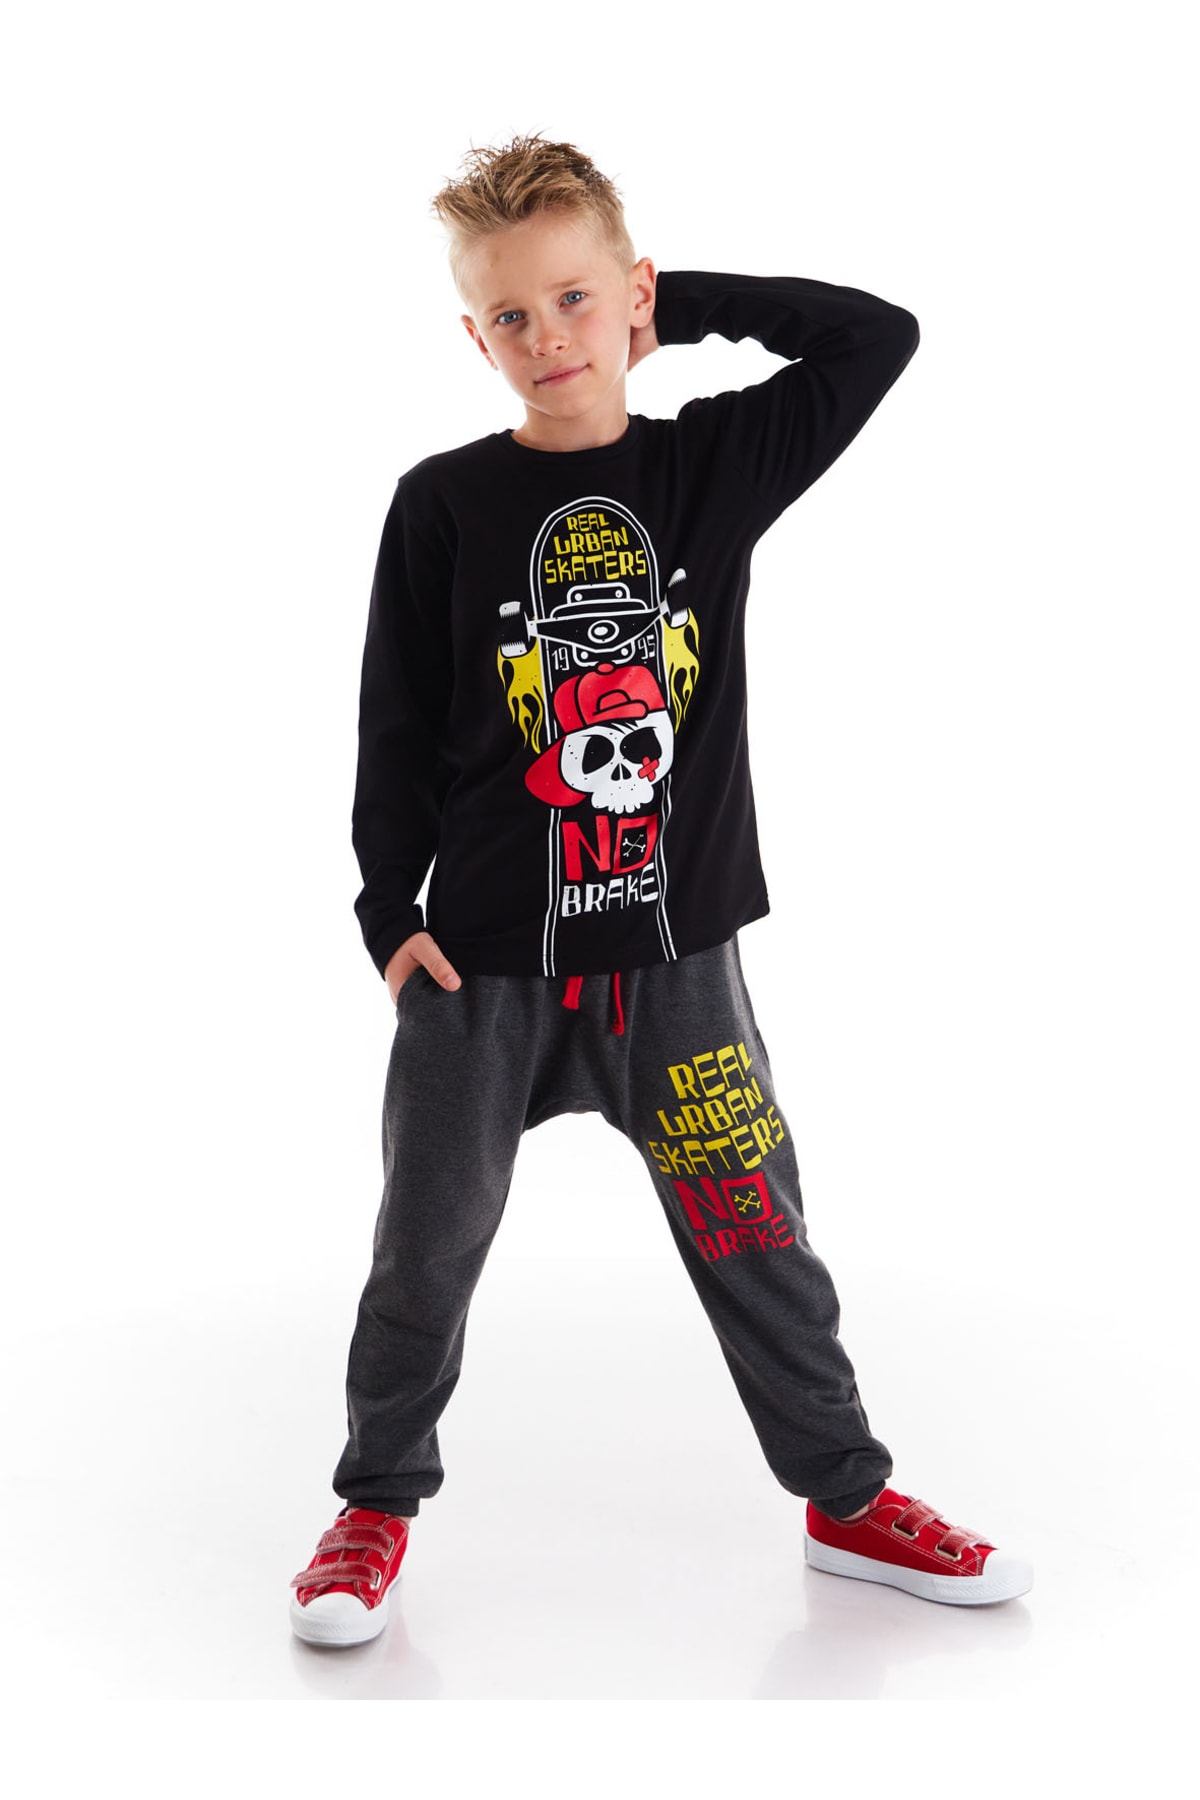 Mushi Black Skateboard Boy T-shirt Trousers Suit